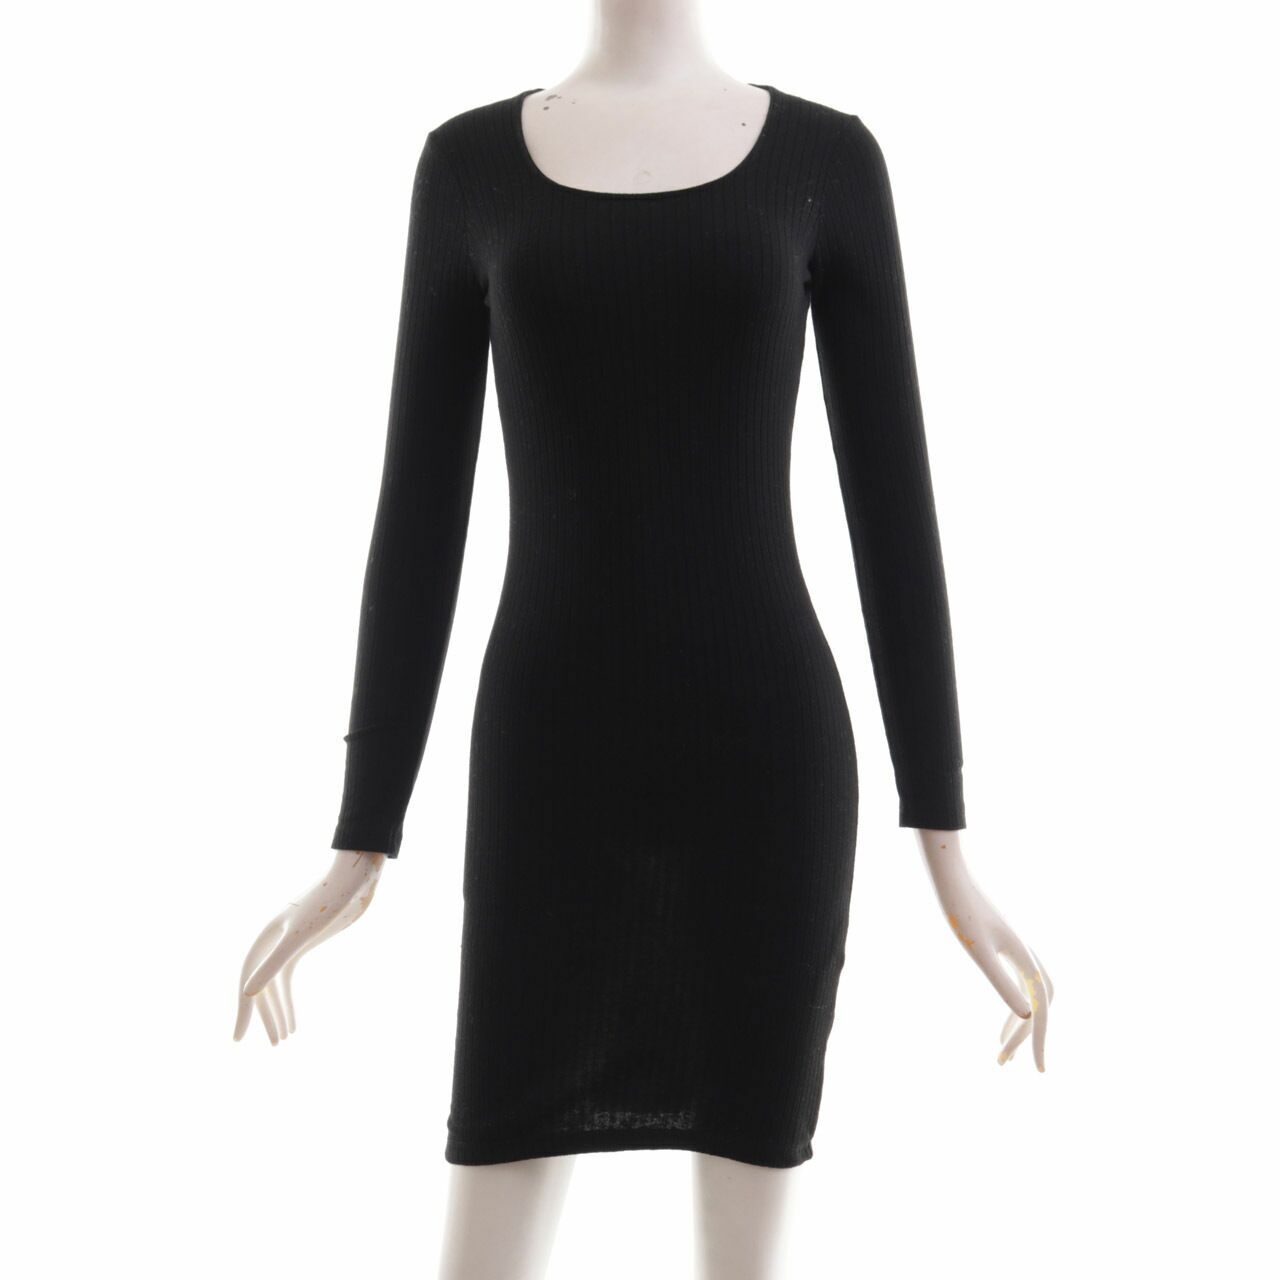 Primark Black Mini Dress